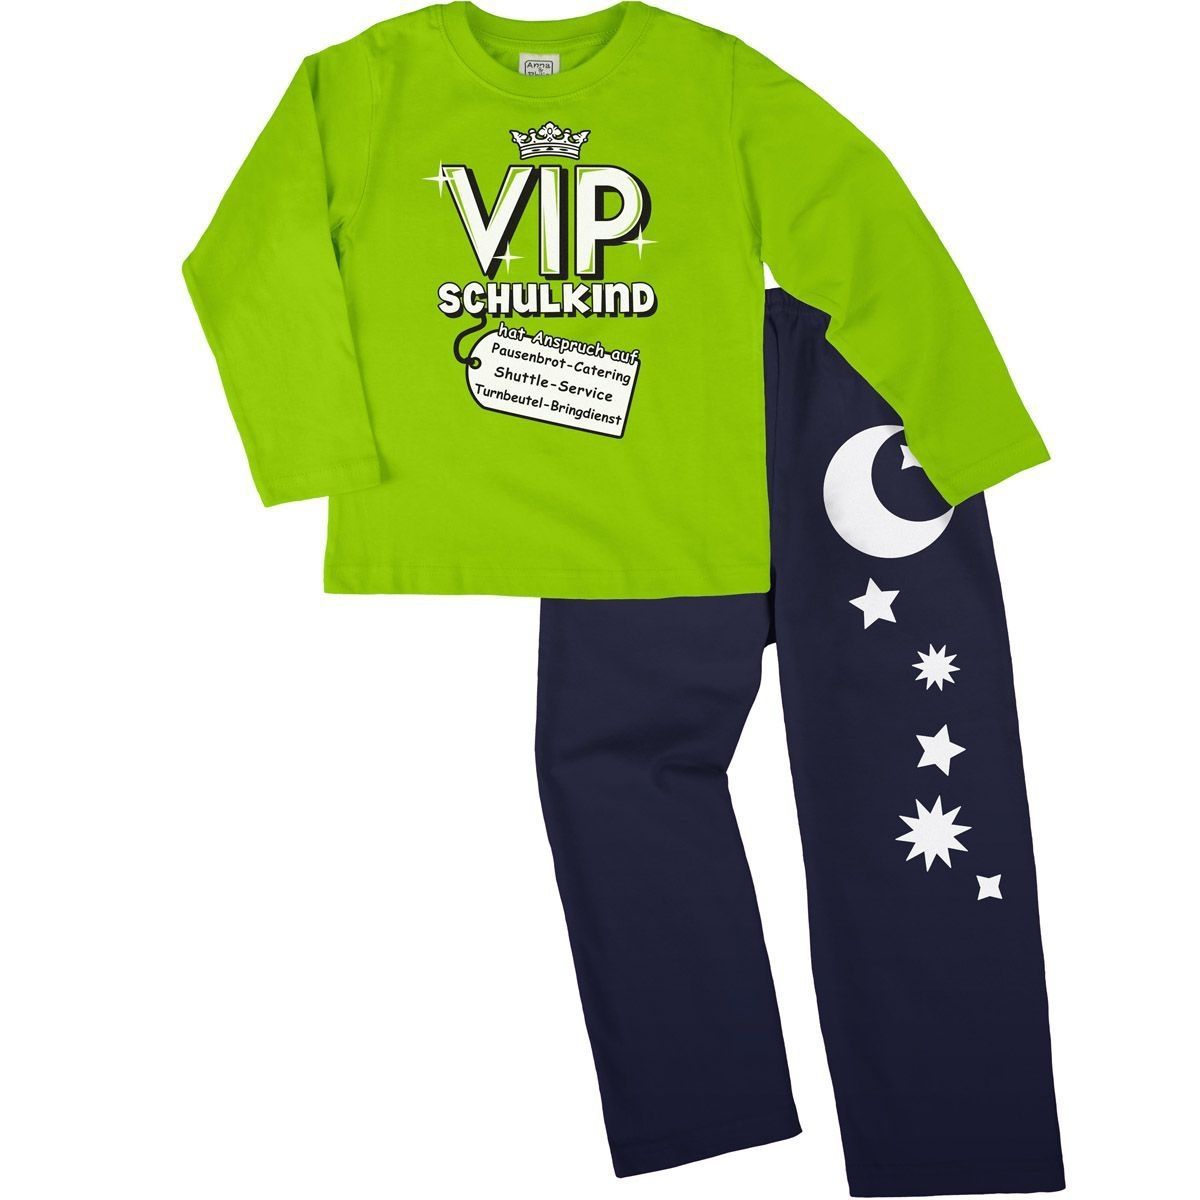 VIP Schulkind Pyjama Set hellgrün / navy 122 / 128